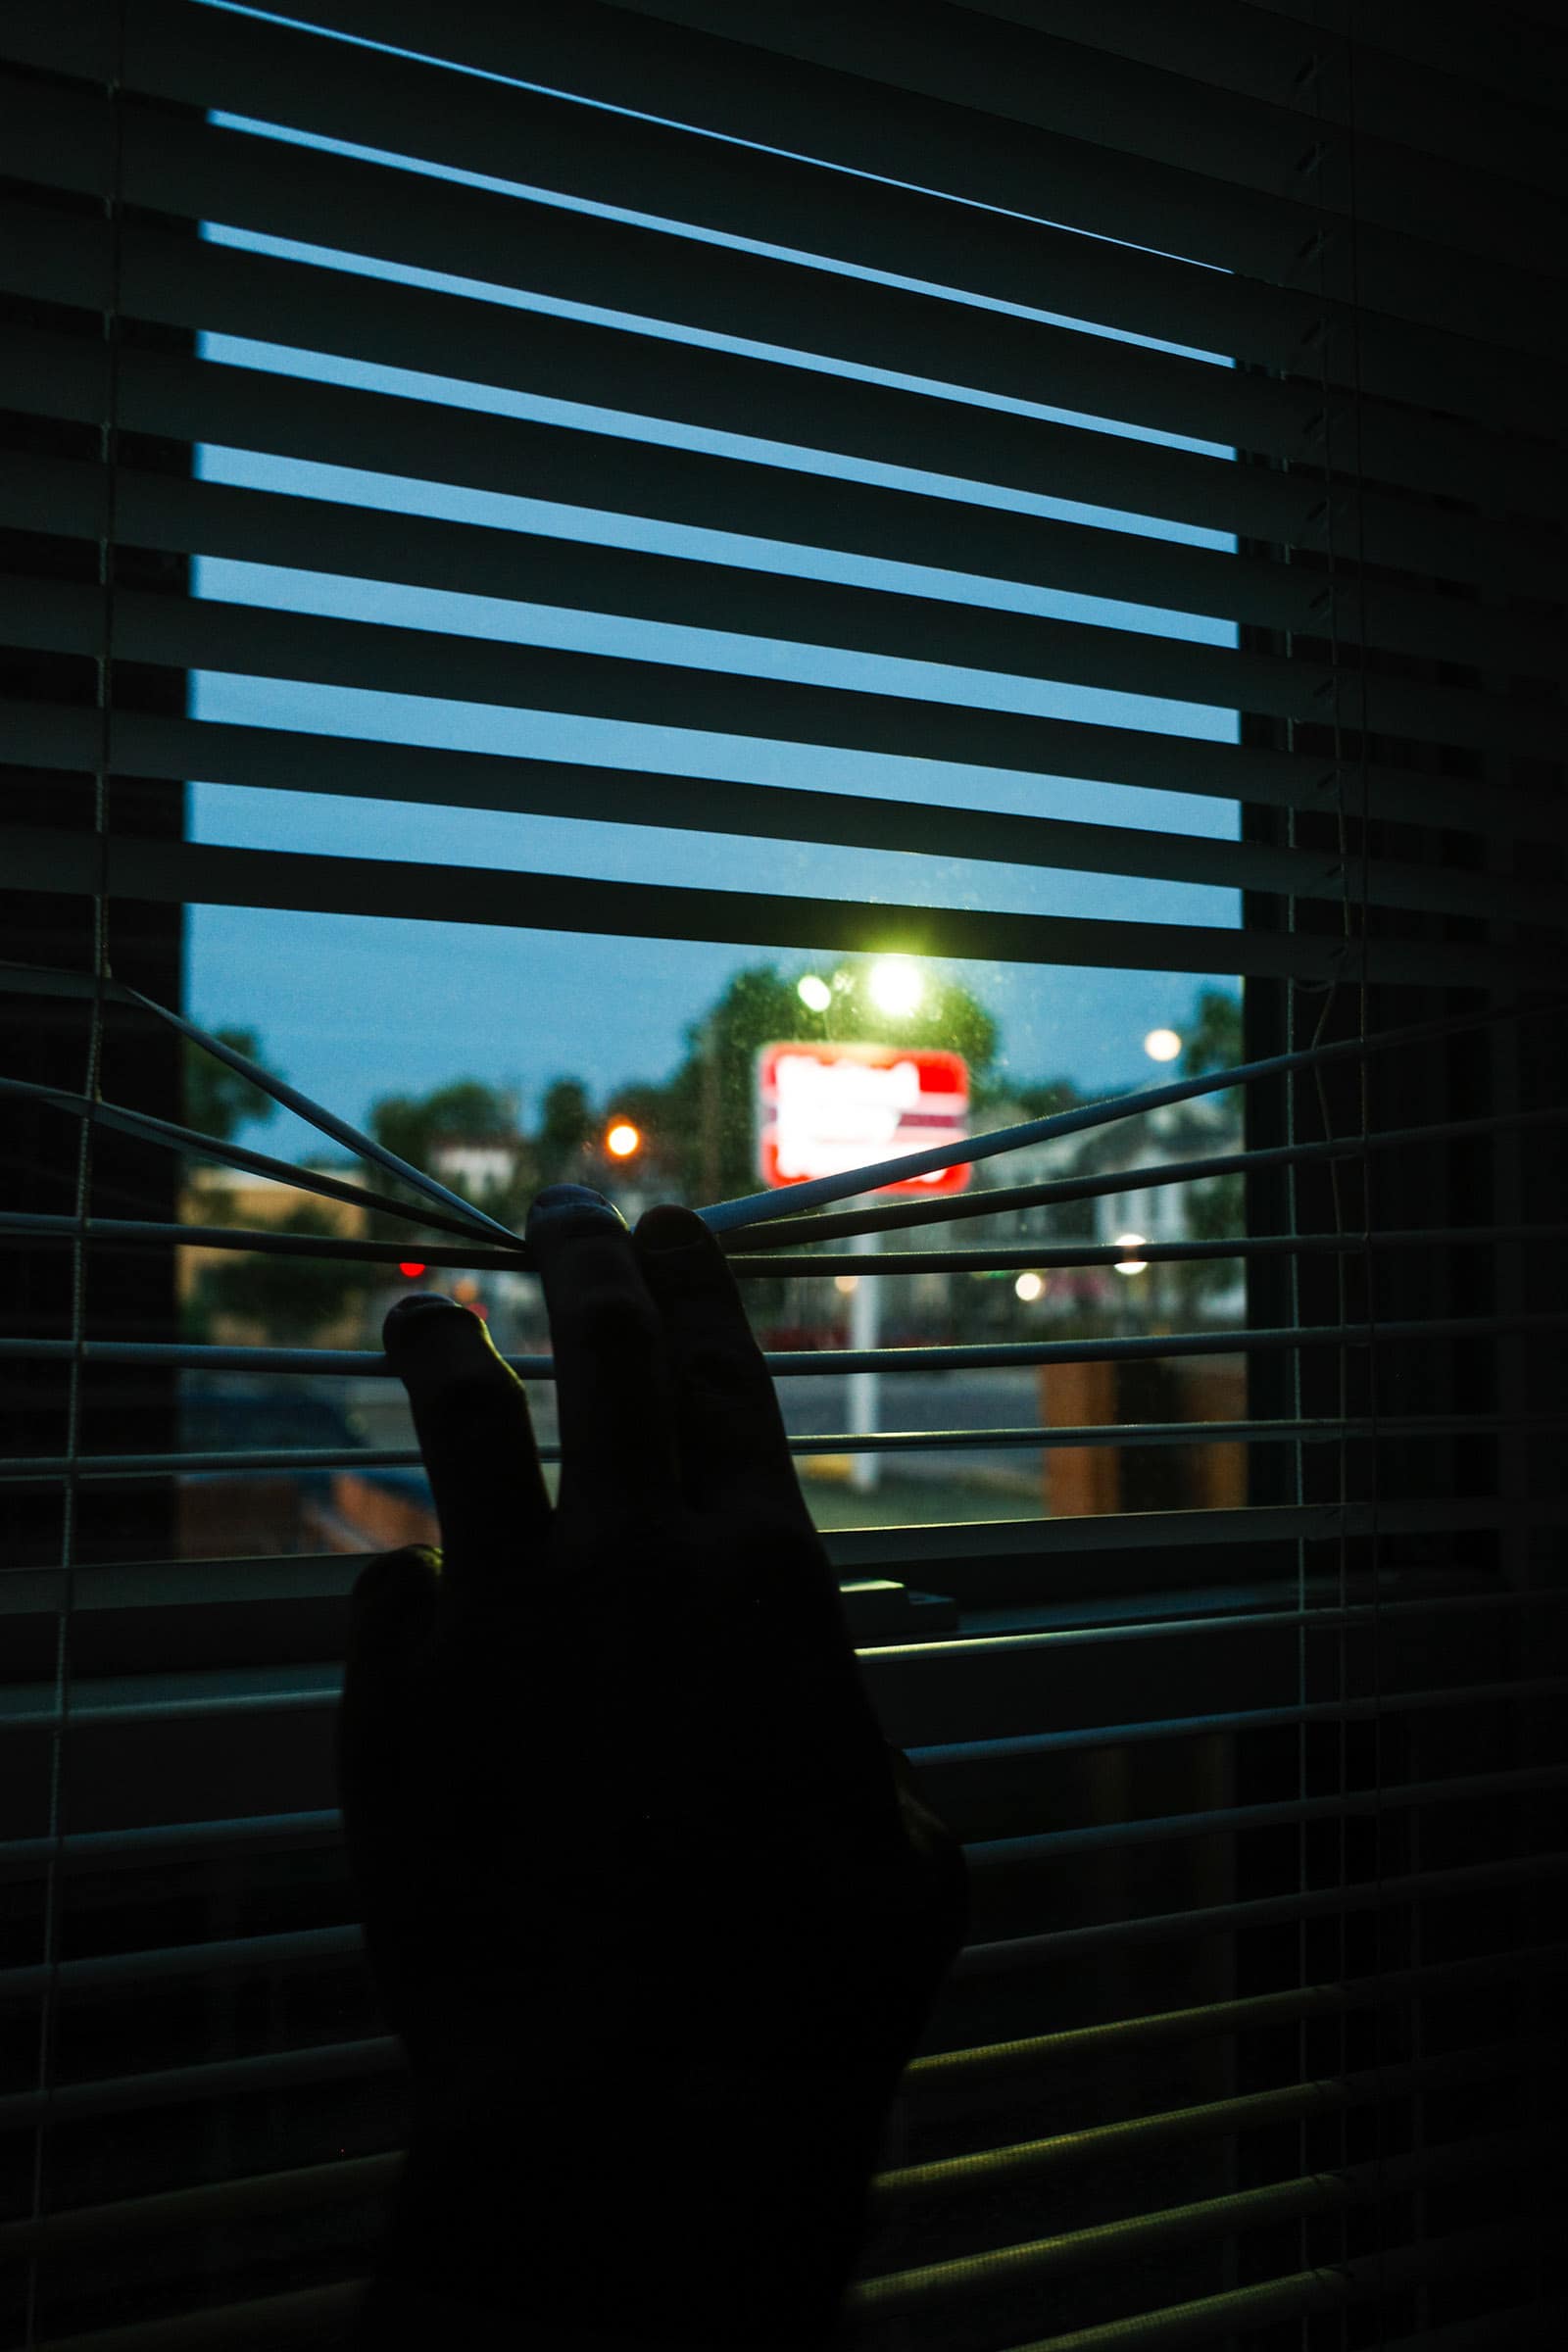 Peeking through blinds at dusk